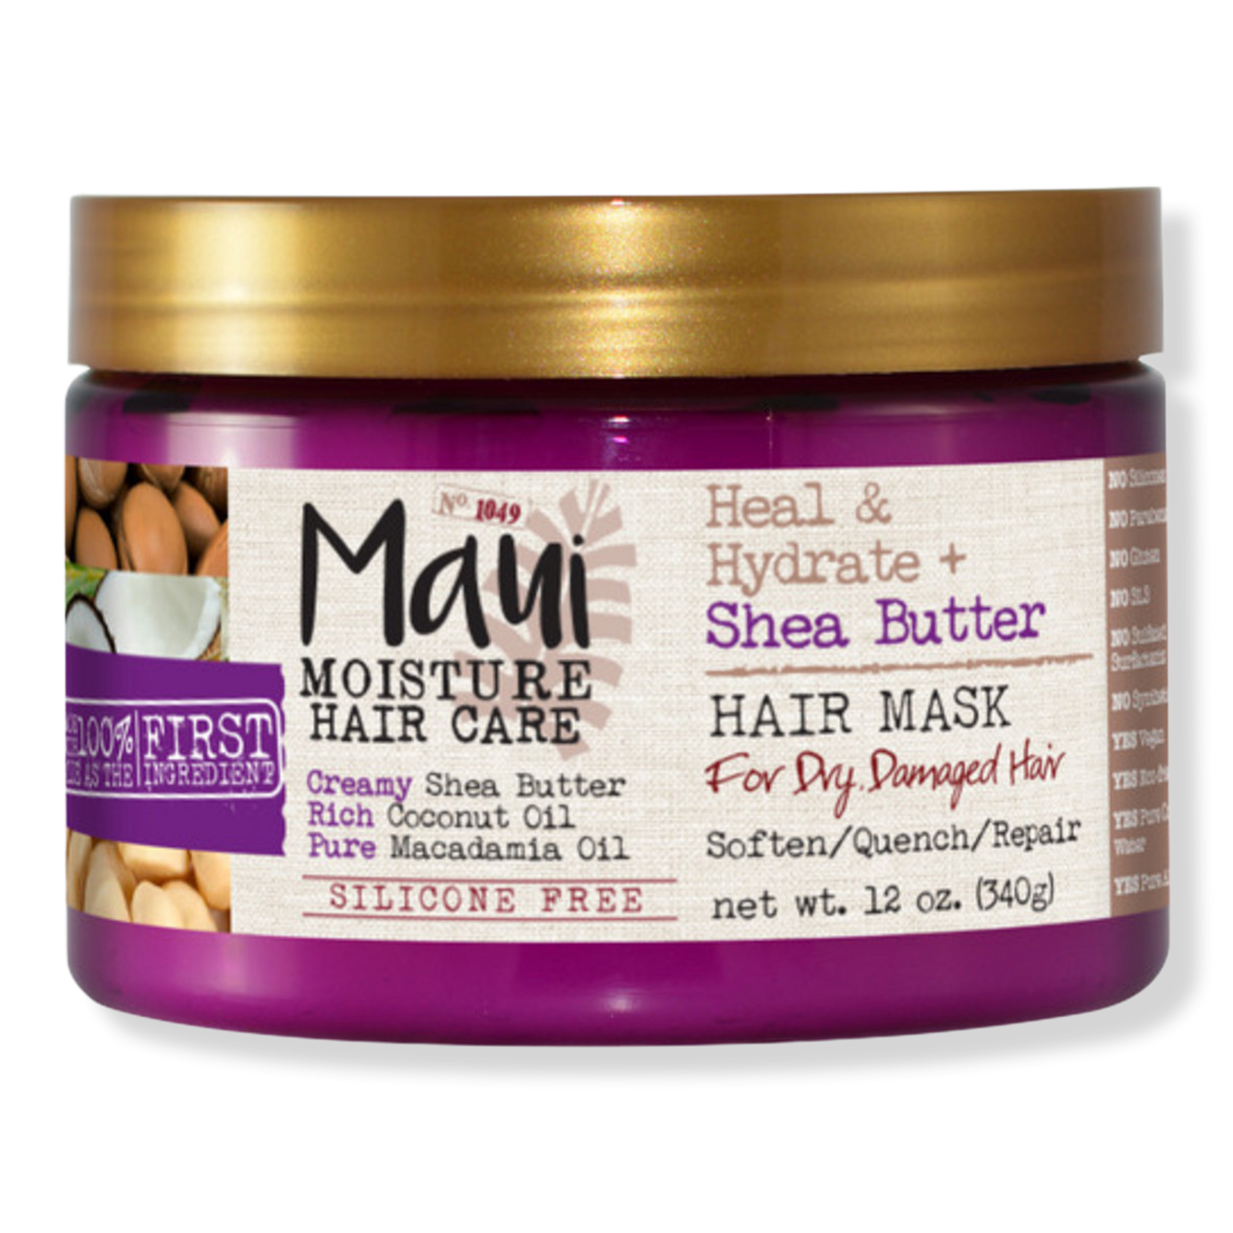 Heal & Hydrate + Shea Butter Hair Mask - Maui Moisture | Ulta Beauty